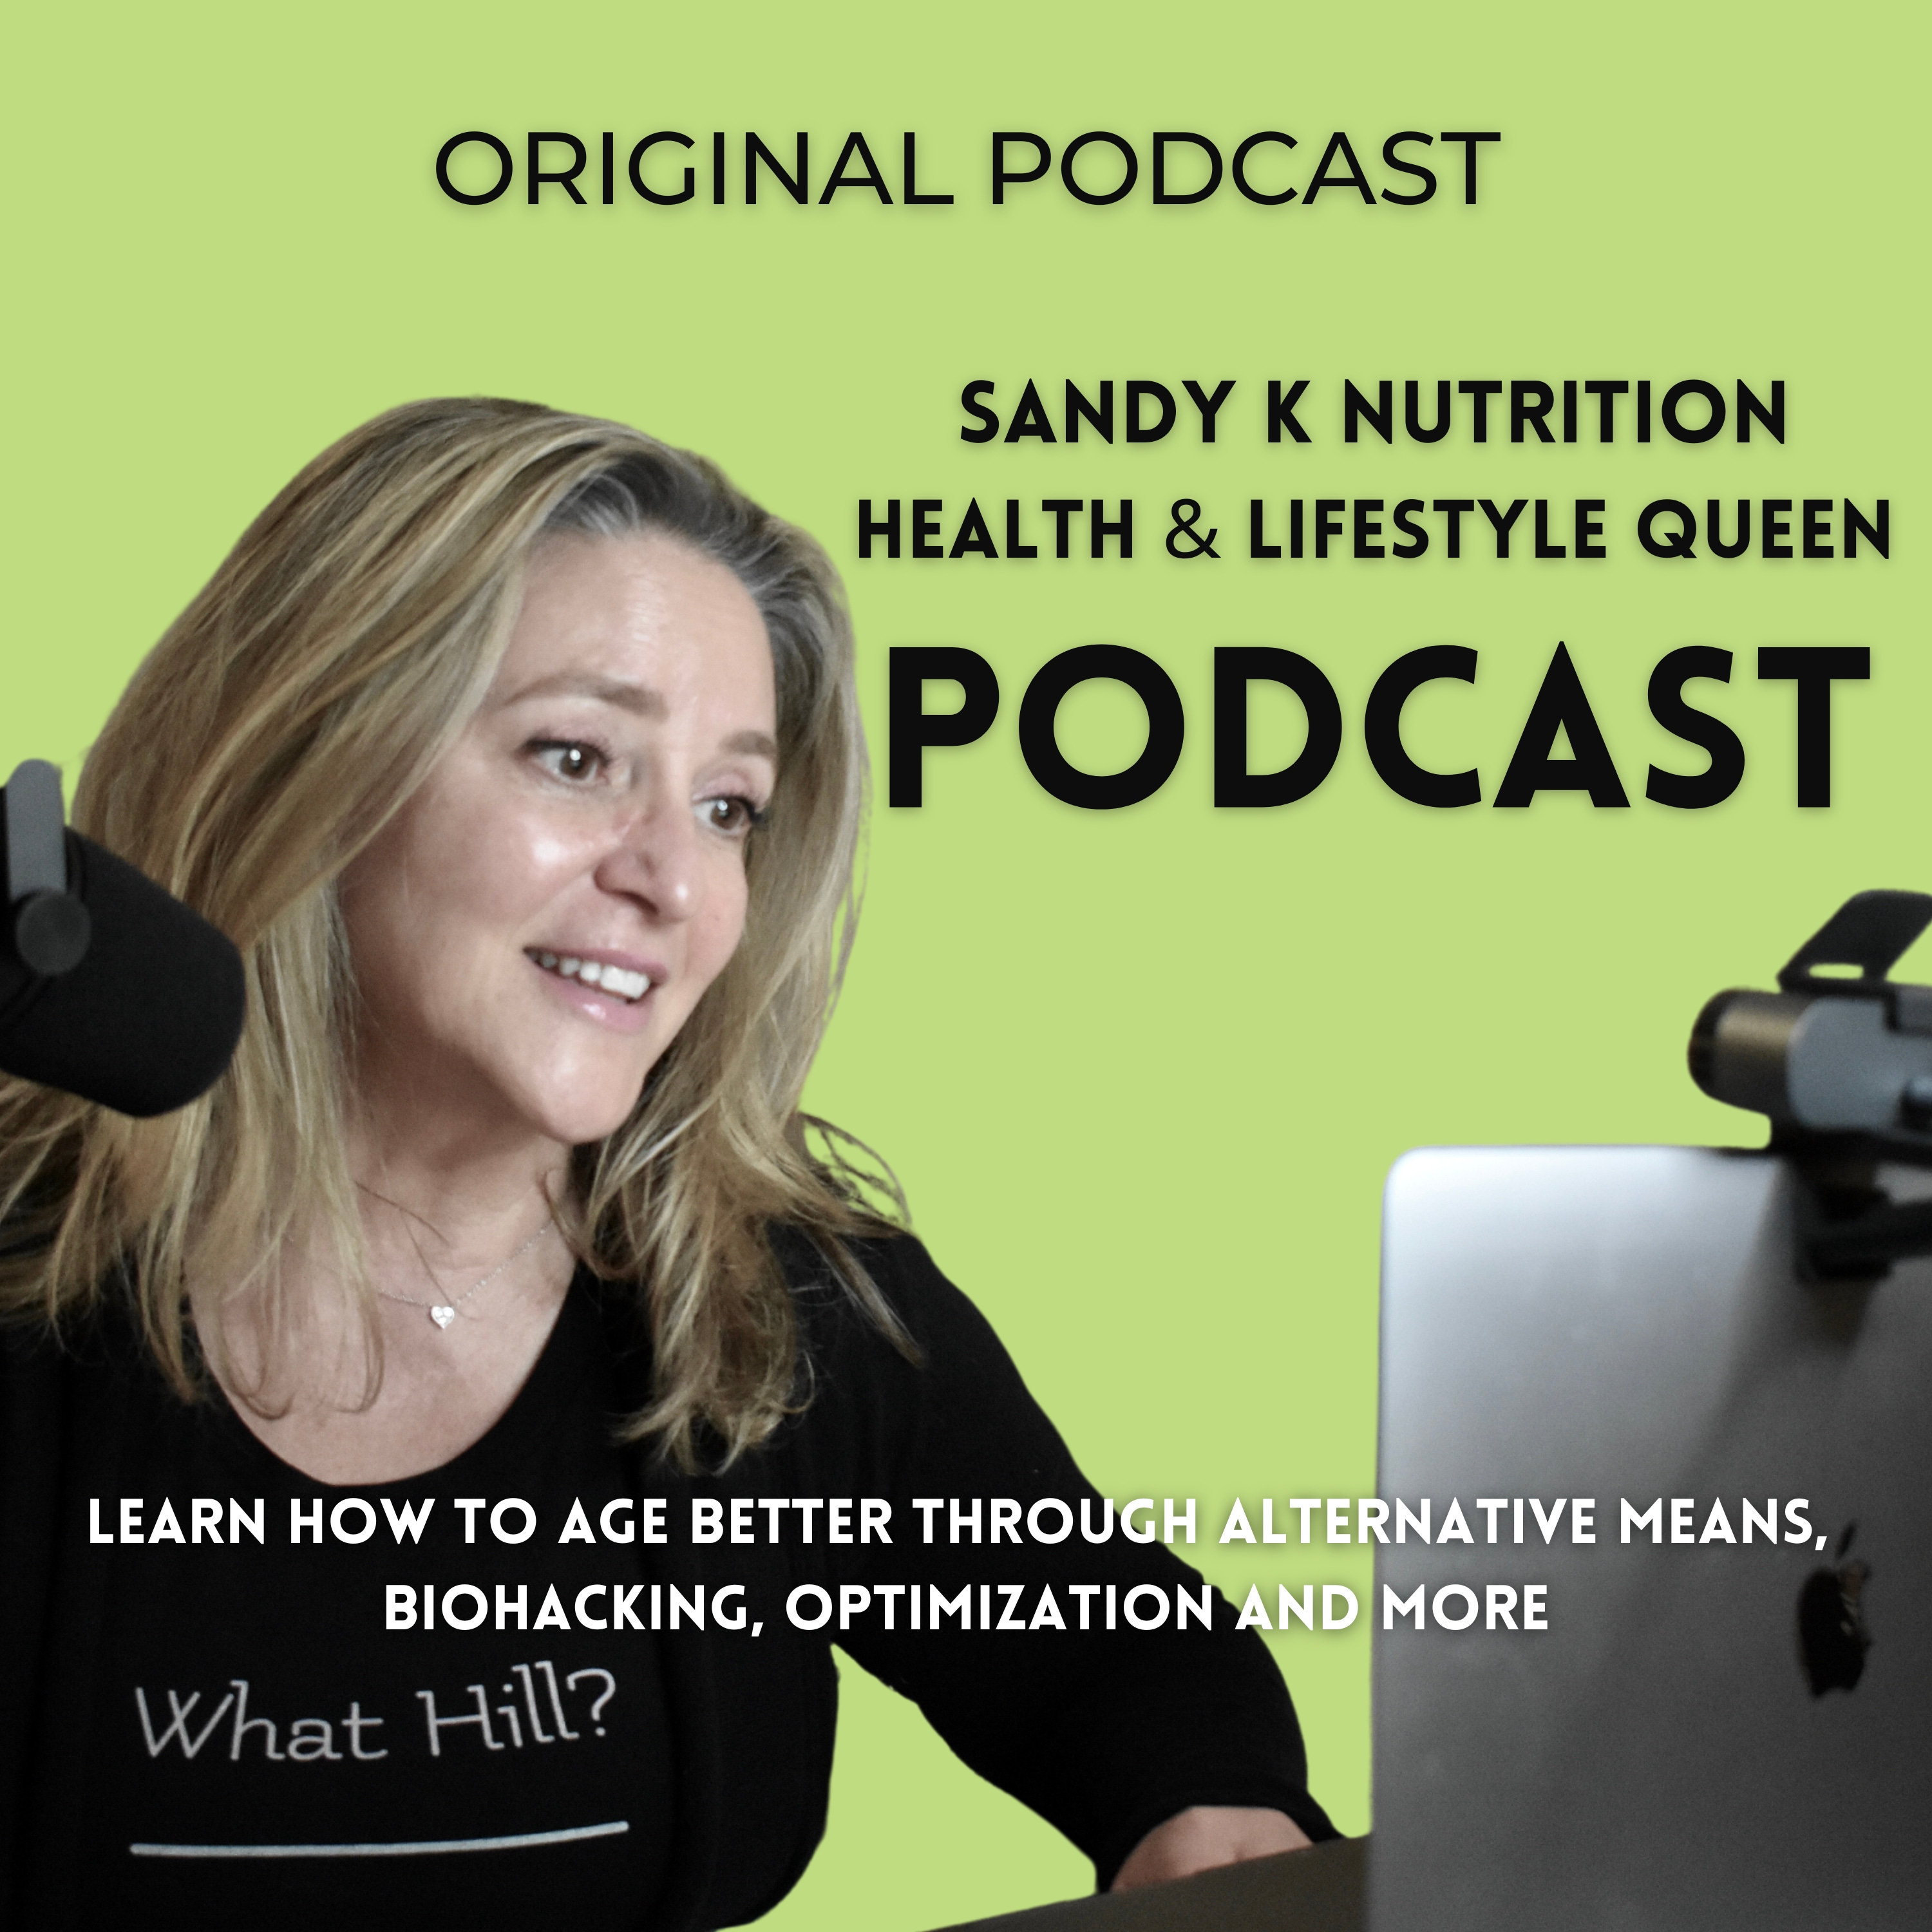 Sandy K Nutrition Health & Lifestyle Queen